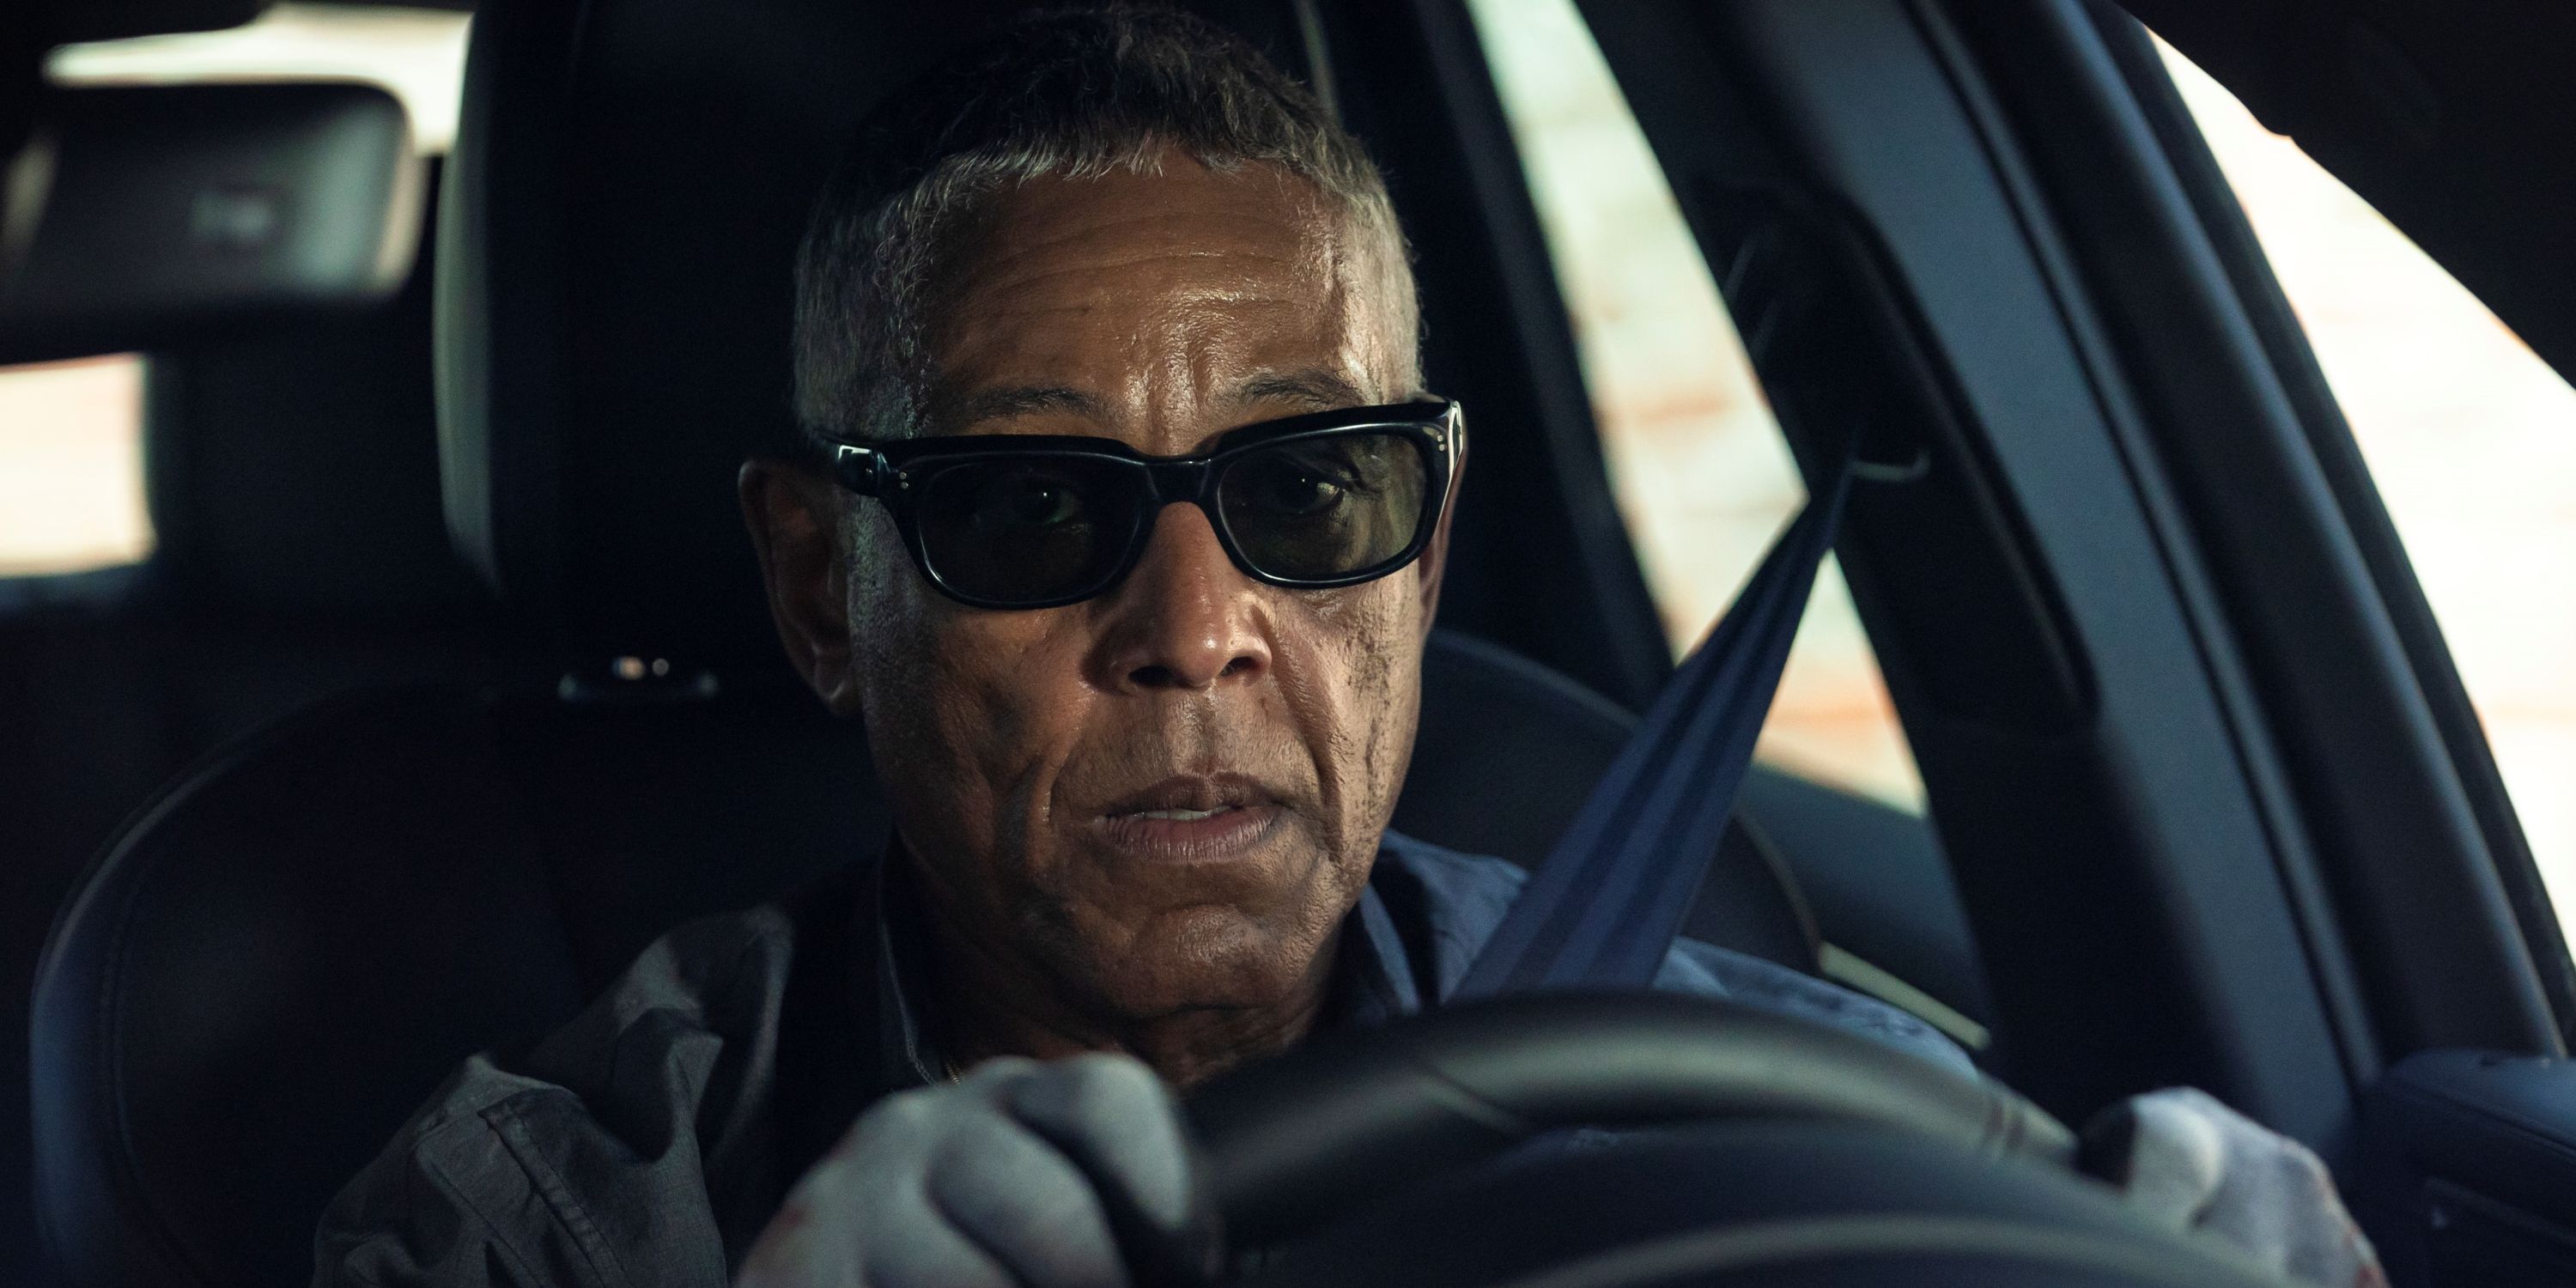 Giancarlo Esposito as Gray Parish driving a car while wearing sunglasses in Episode 1 of Season 1 of Parish